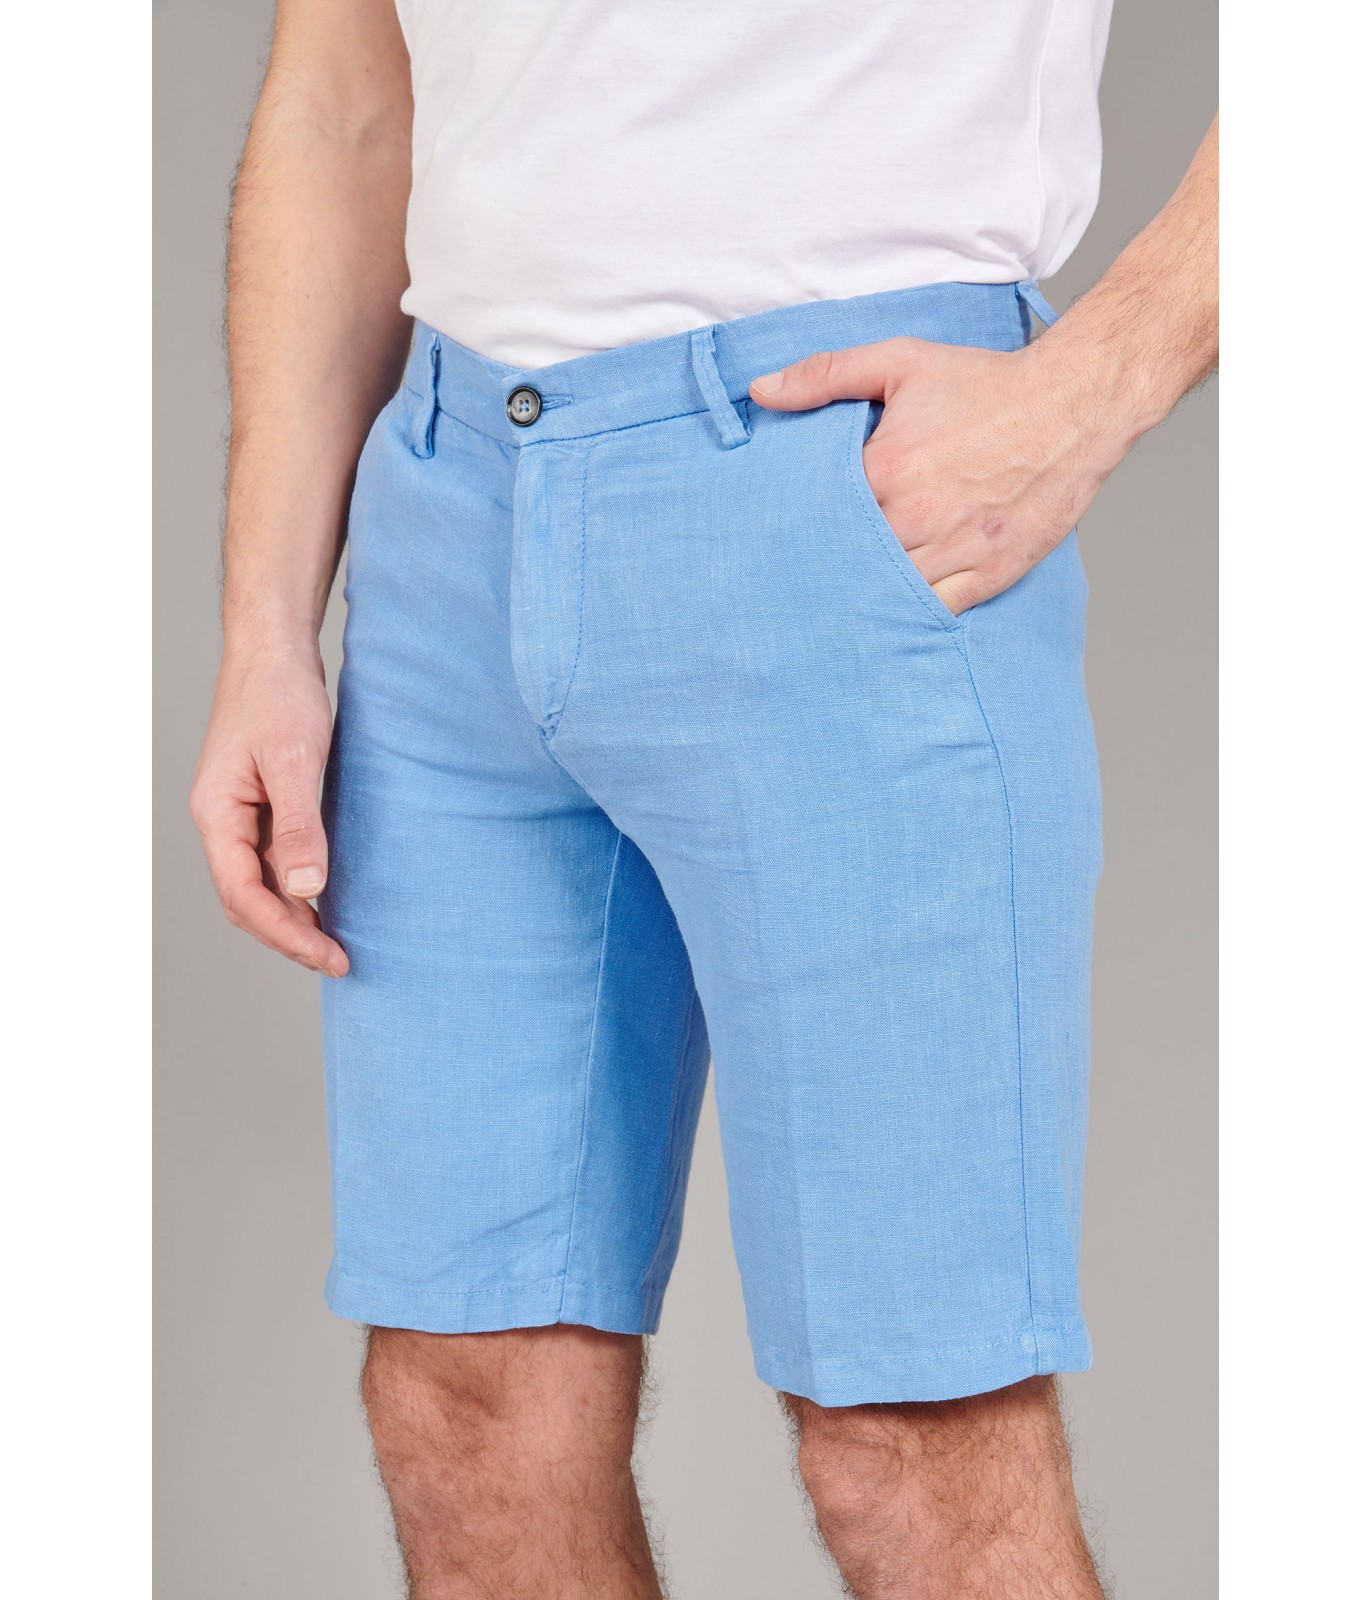 Bermuda shorts blue - Bermudas in linen mix